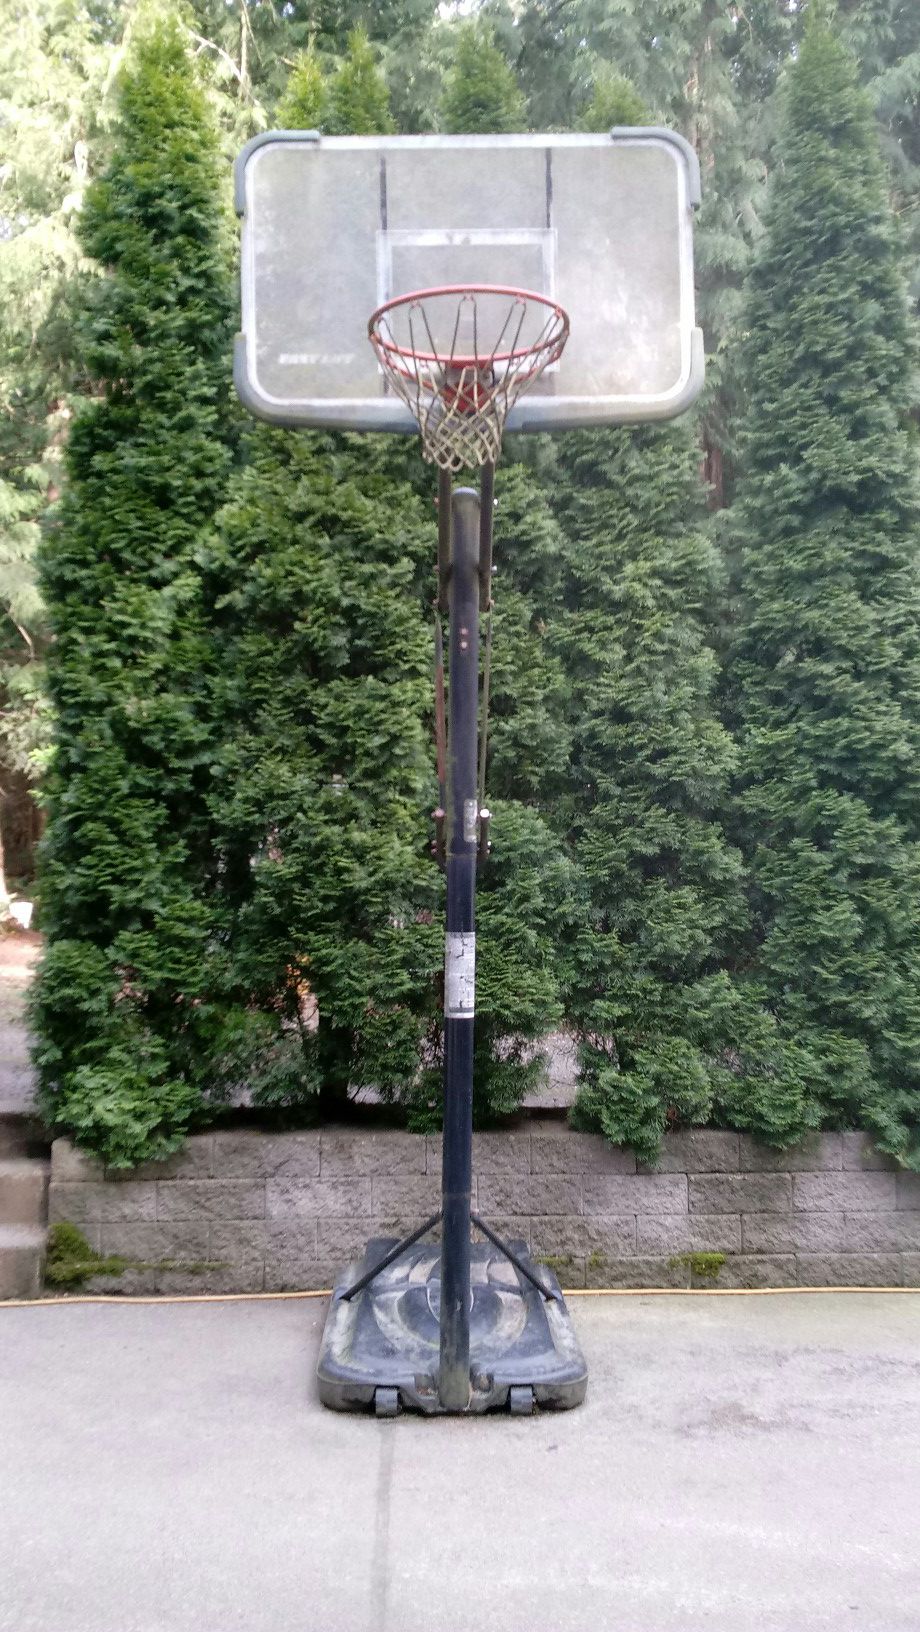 Adjustable height basketball hoop